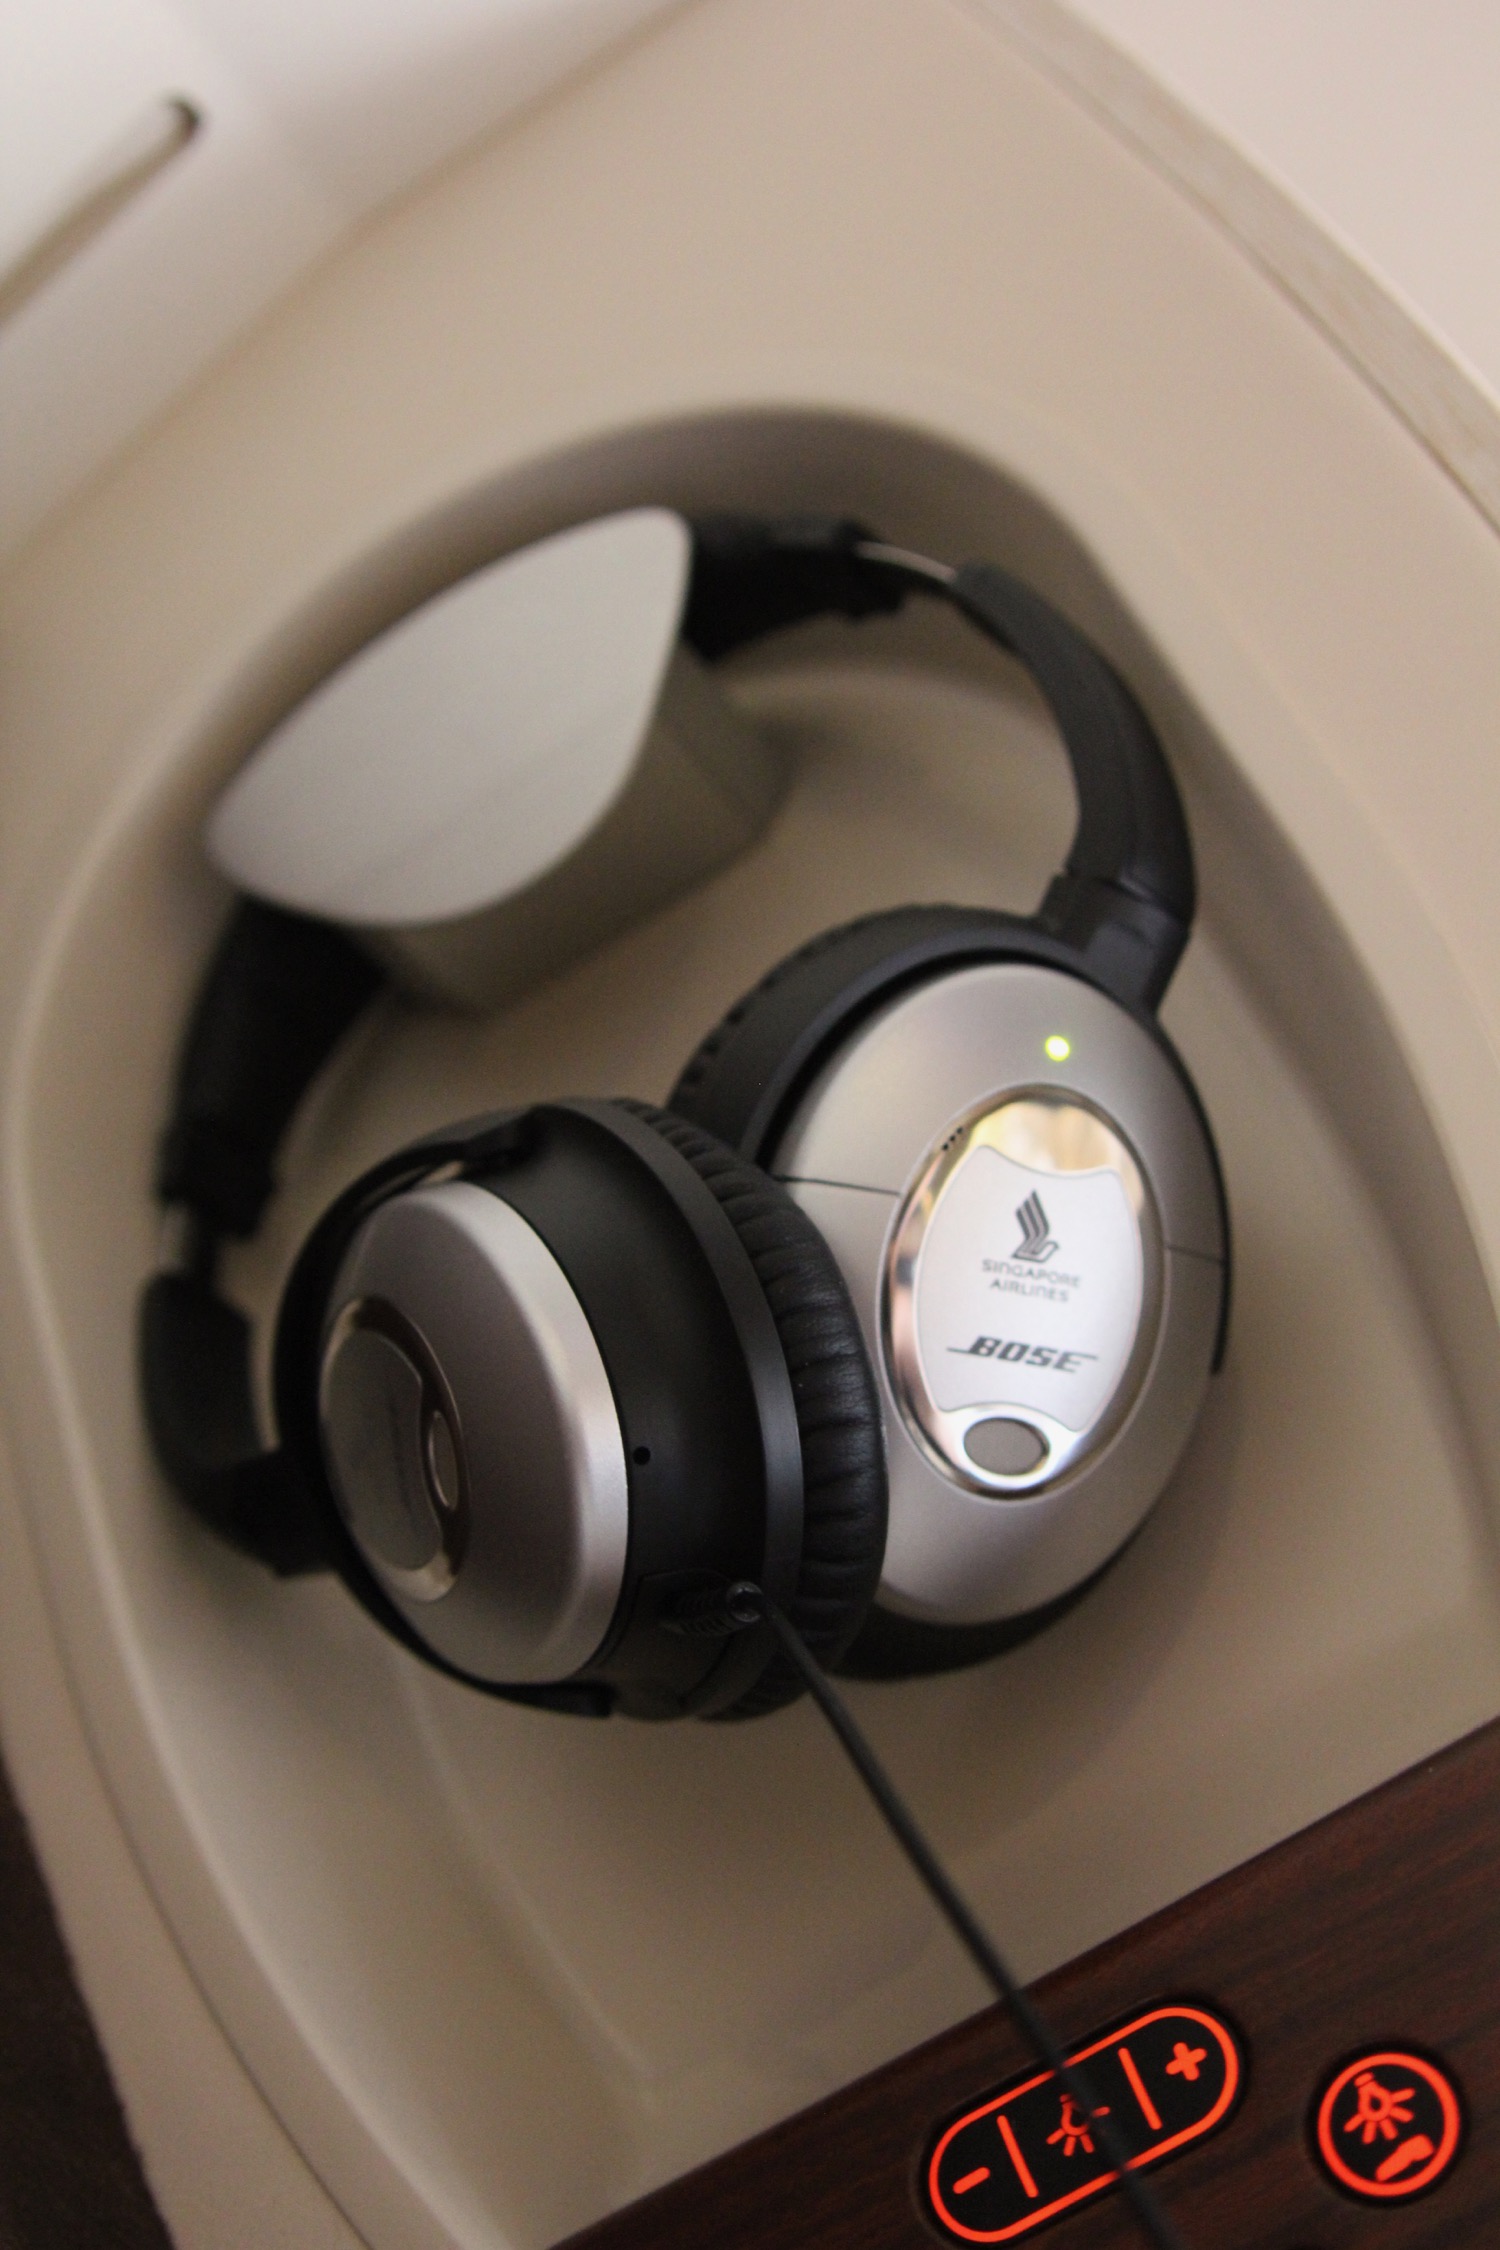 a pair of headphones in a sink